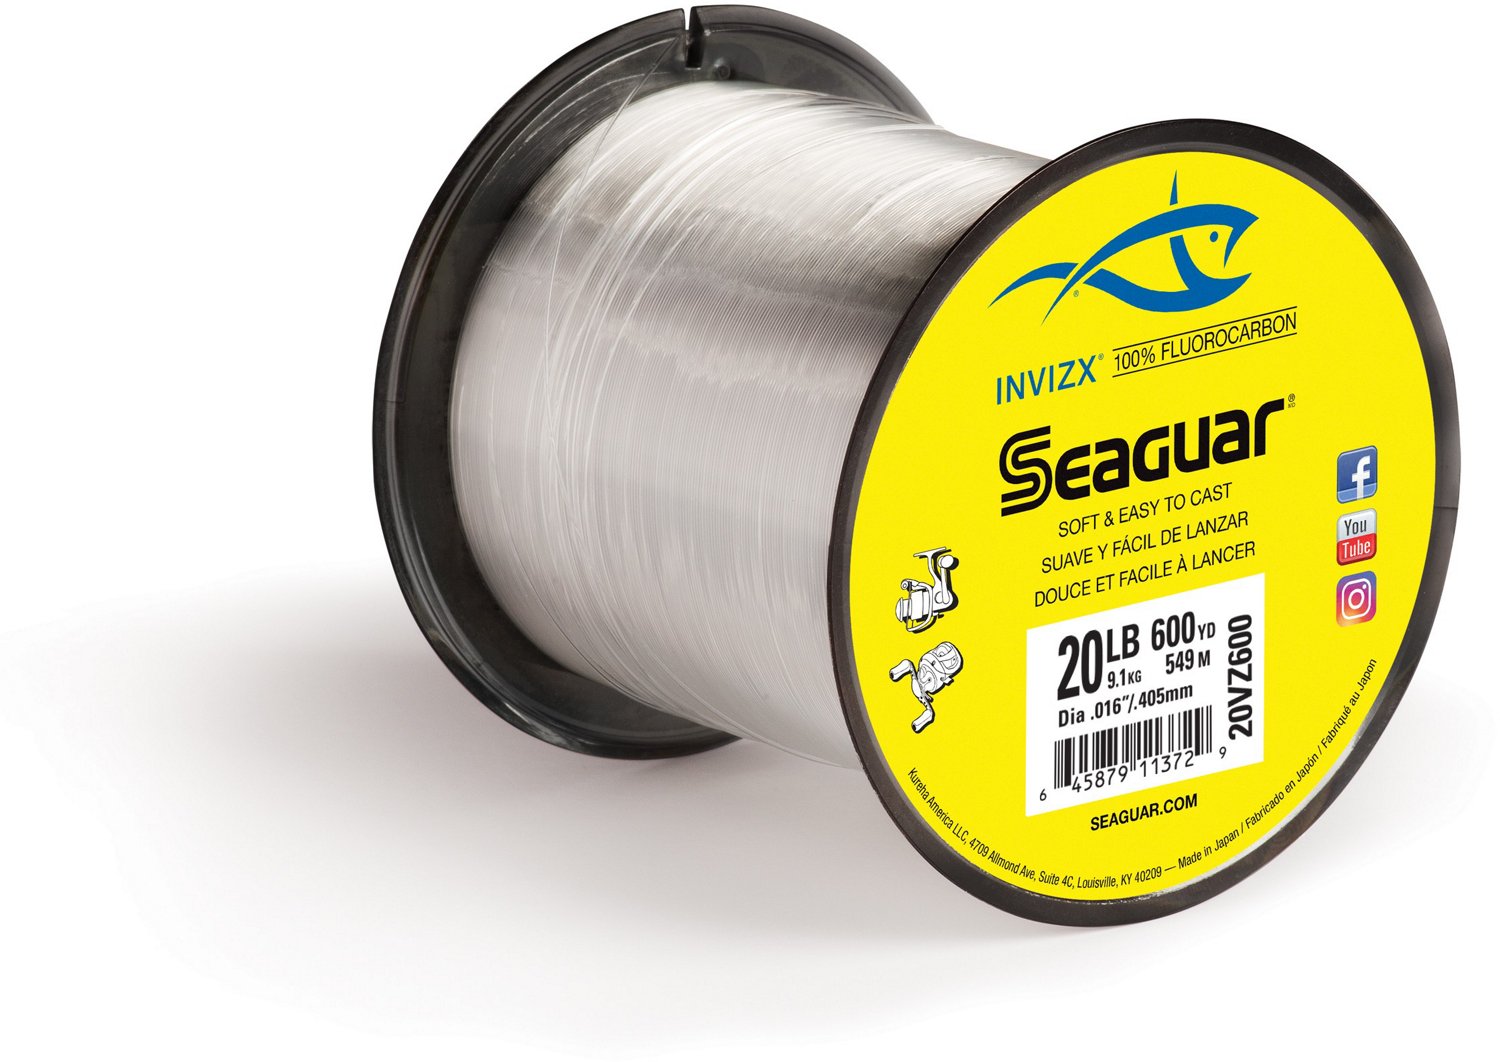 Seaguar INVIZX 600 yd Fluorocarbon Fishing Line